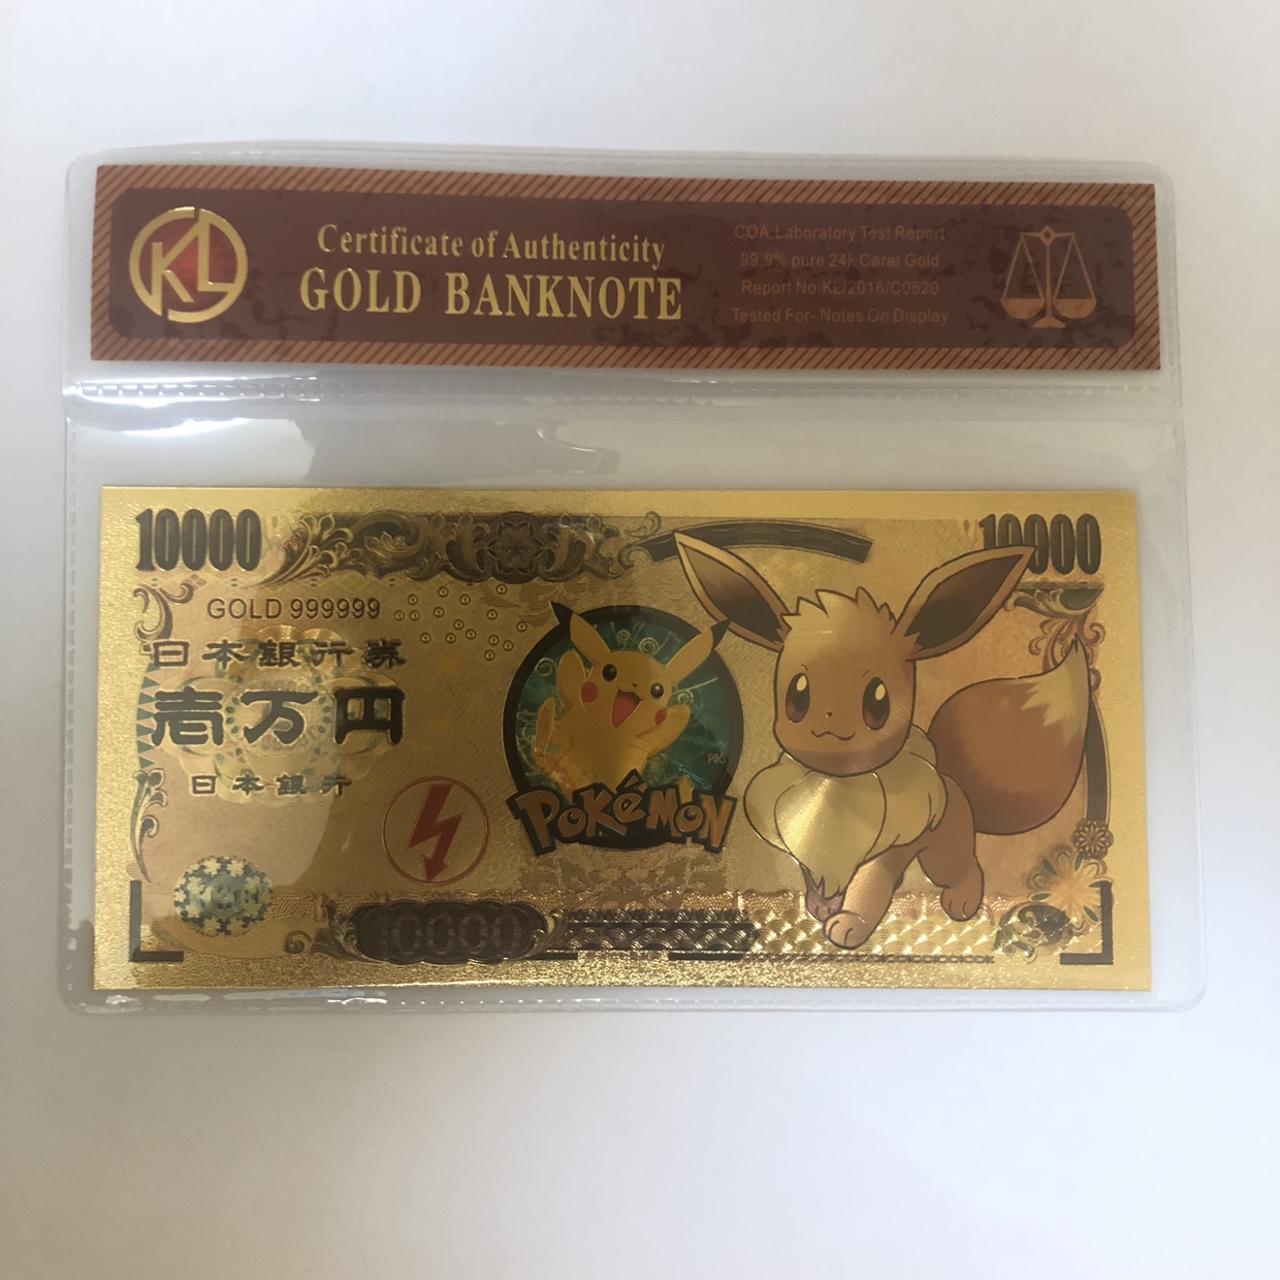 USA Banknoten Pokemon Charmander Eevee 10B Yen Novelty 24K Gold